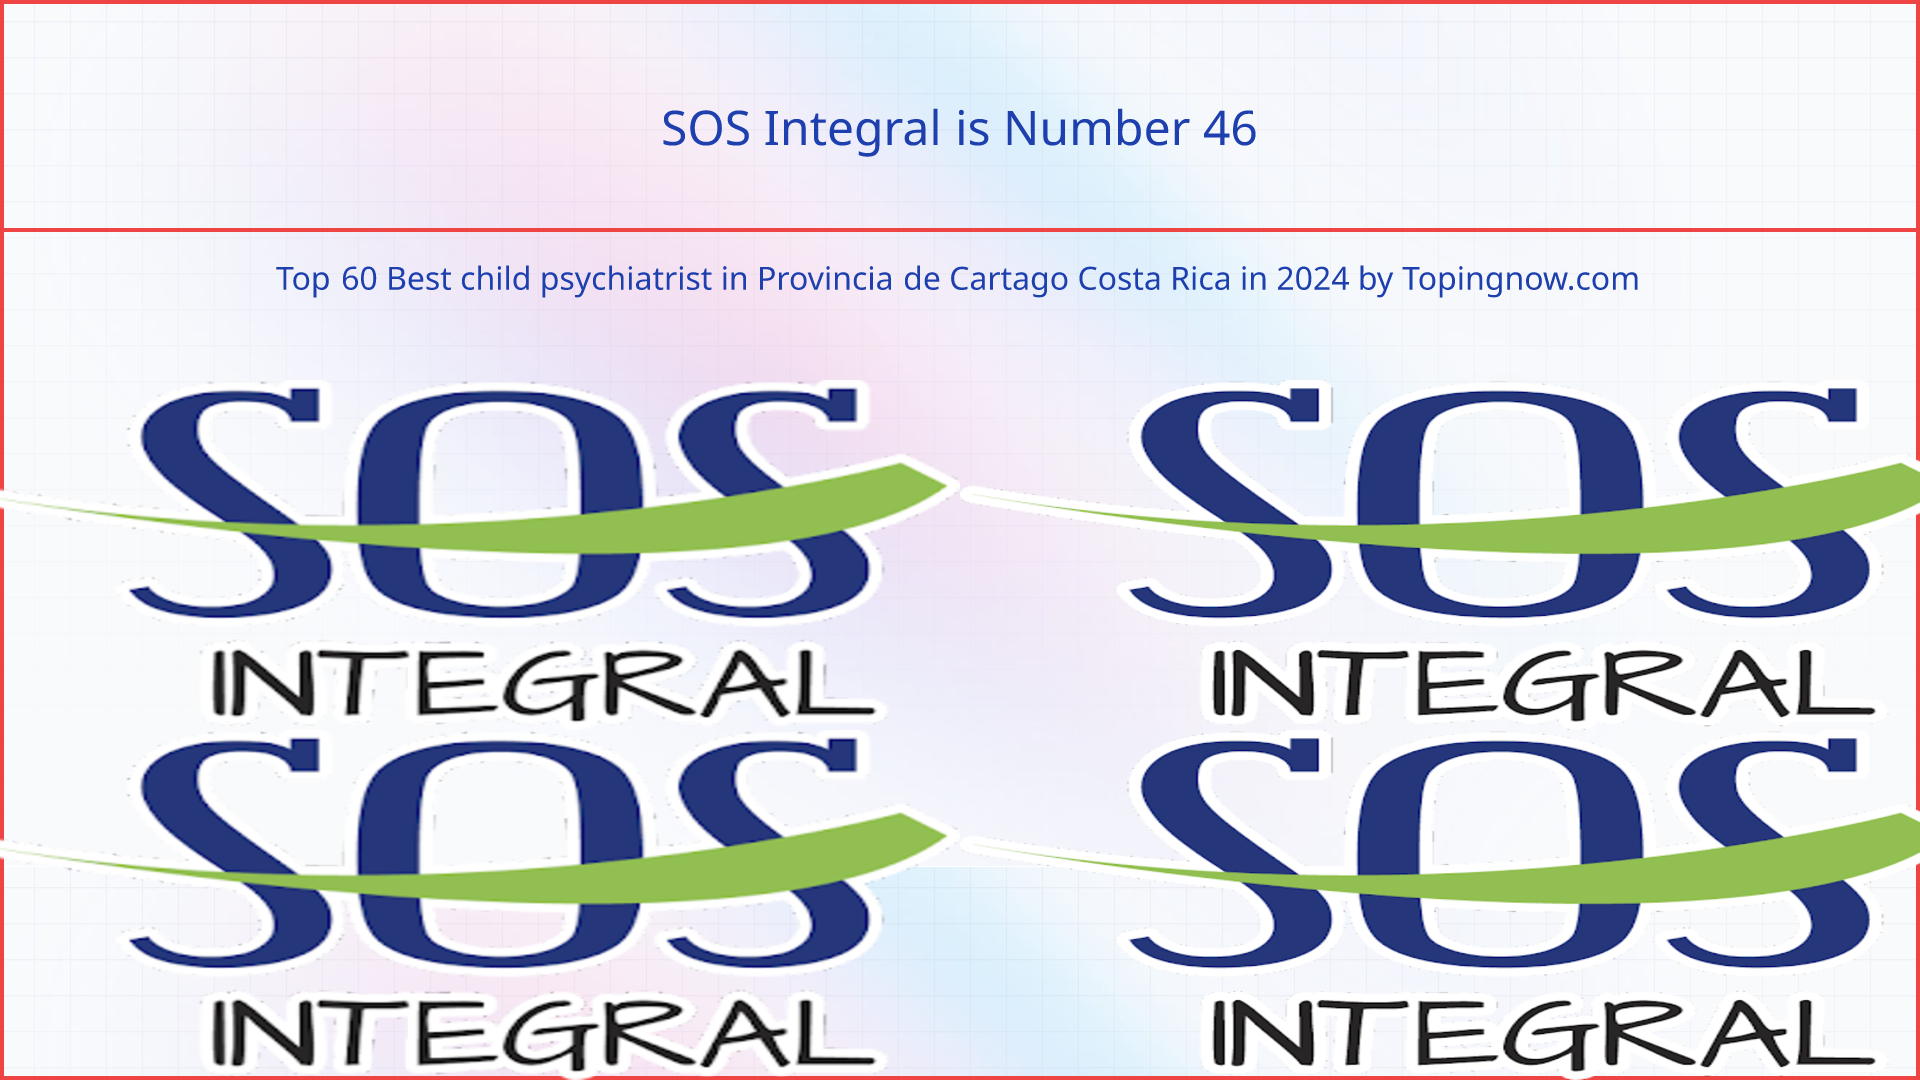 SOS Integral: Top 60 Best child psychiatrist in Provincia de Cartago Costa Rica in 2024